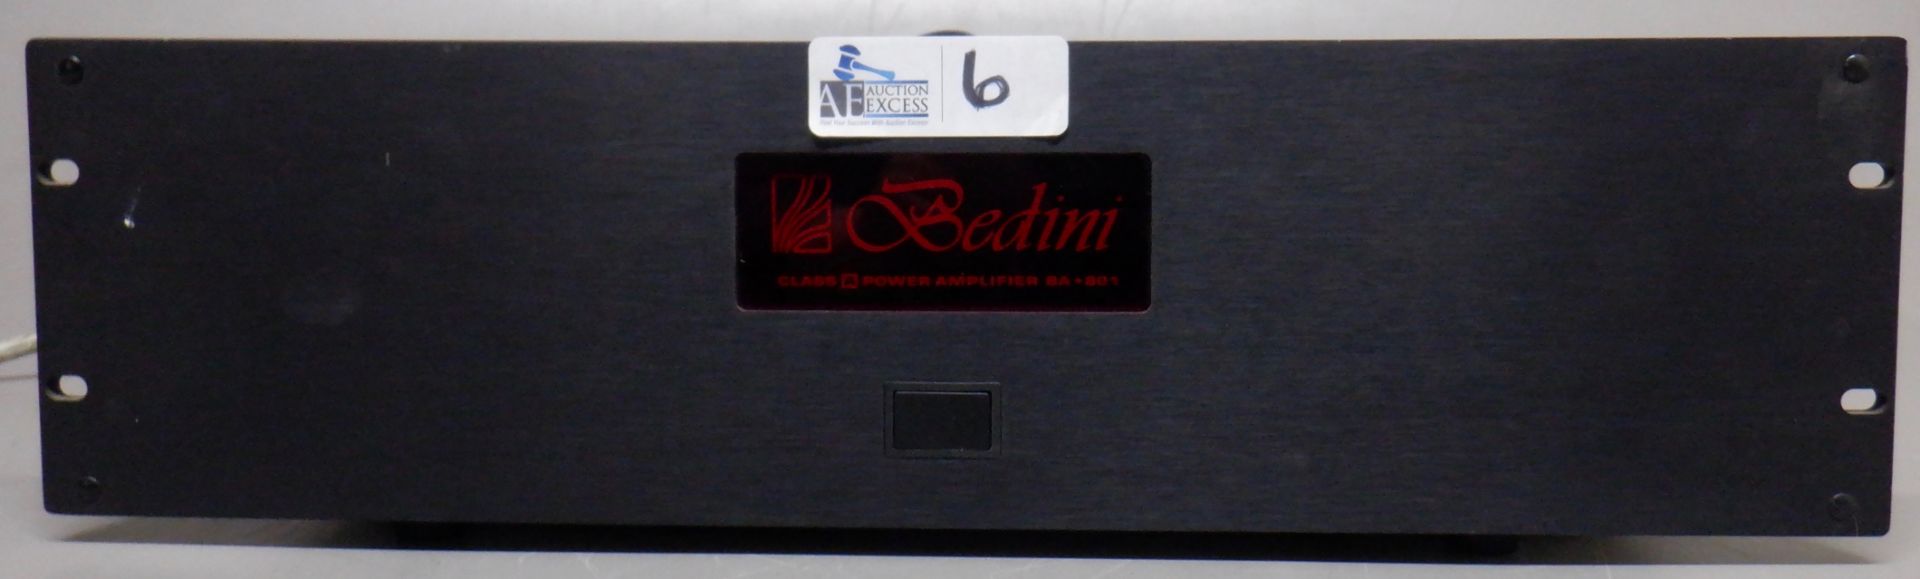 BEDINI BA801 AMP